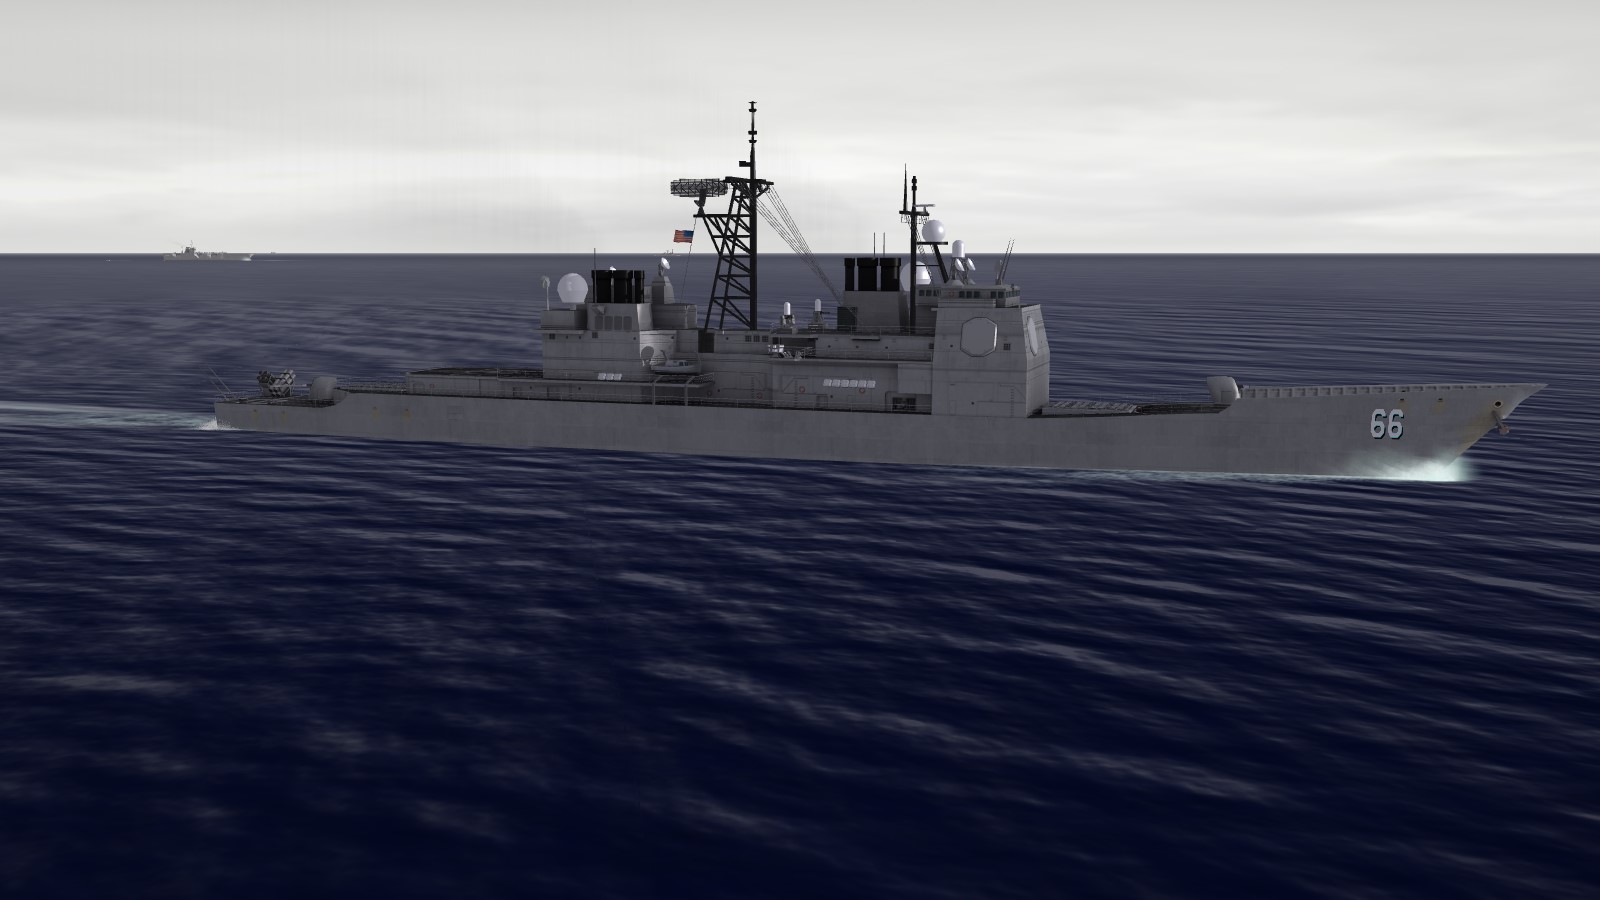 CG-59 Ticonderoga class Aegis cruiser